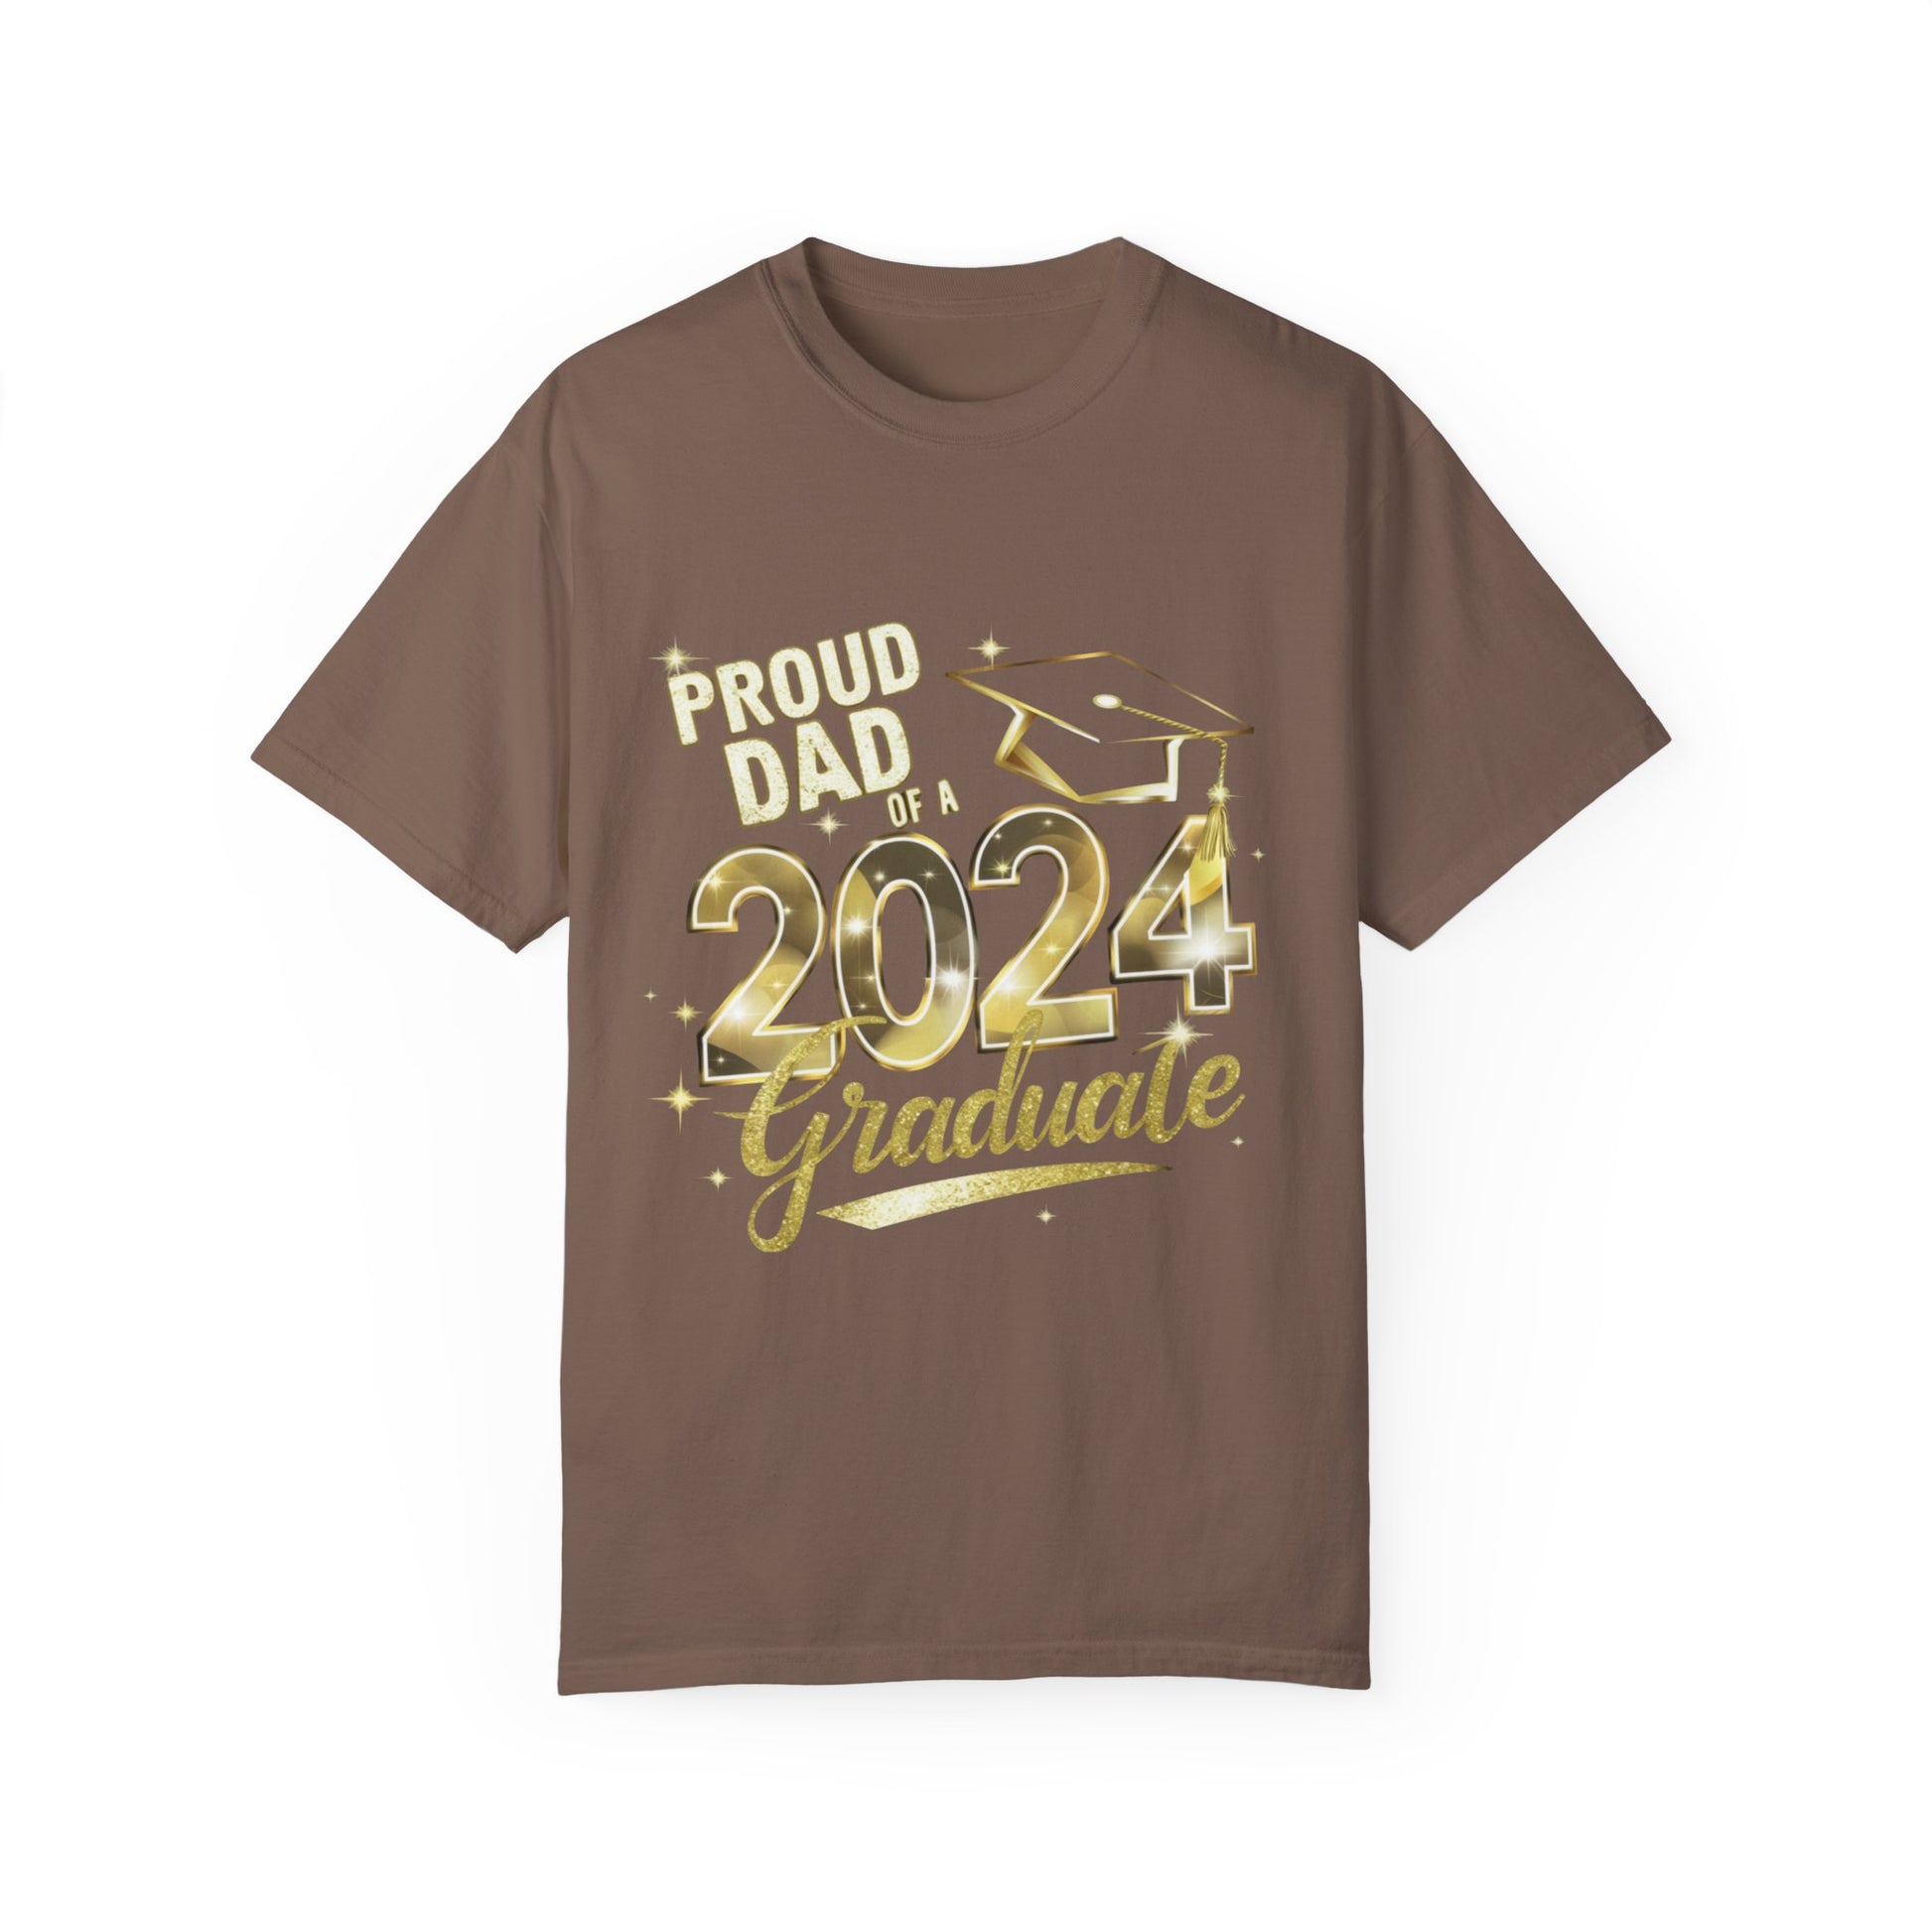 Proud of Dad 2024 Graduate Unisex Garment-dyed T-shirt Cotton Funny Humorous Graphic Soft Premium Unisex Men Women Espresso T-shirt Birthday Gift-15